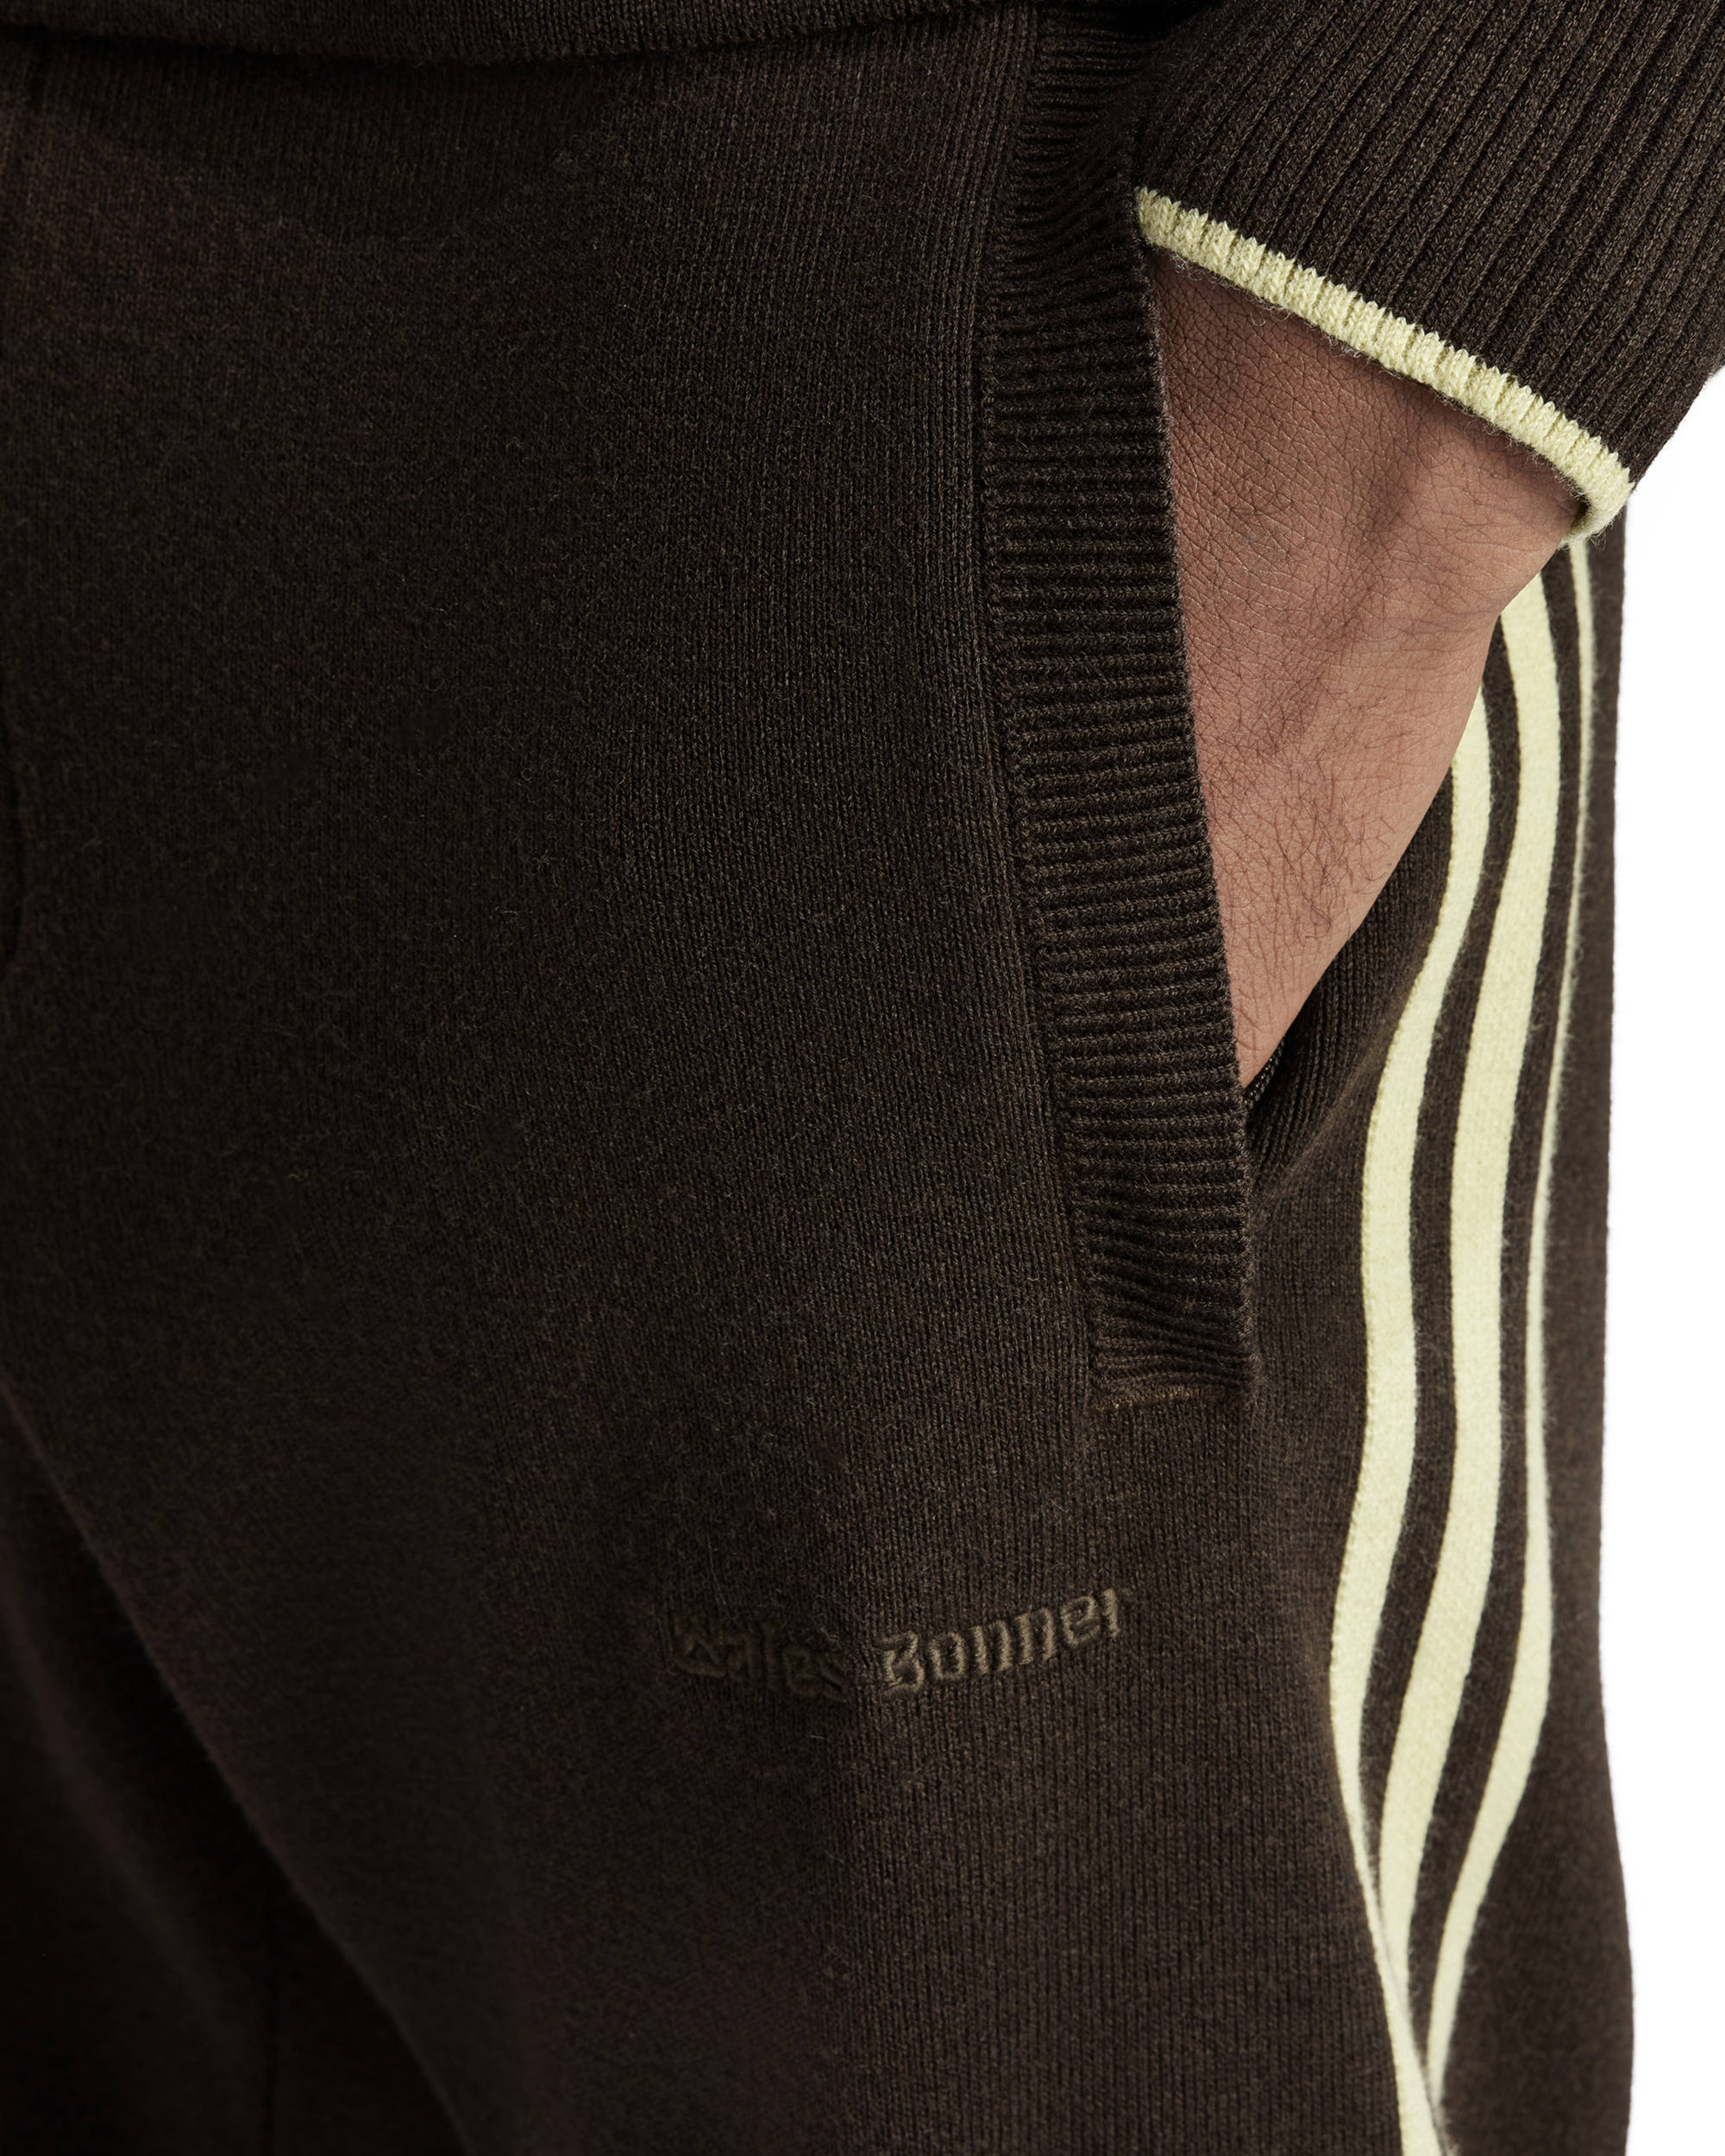 Wales Bonner Knit Pants - Dark Brown / Cream White